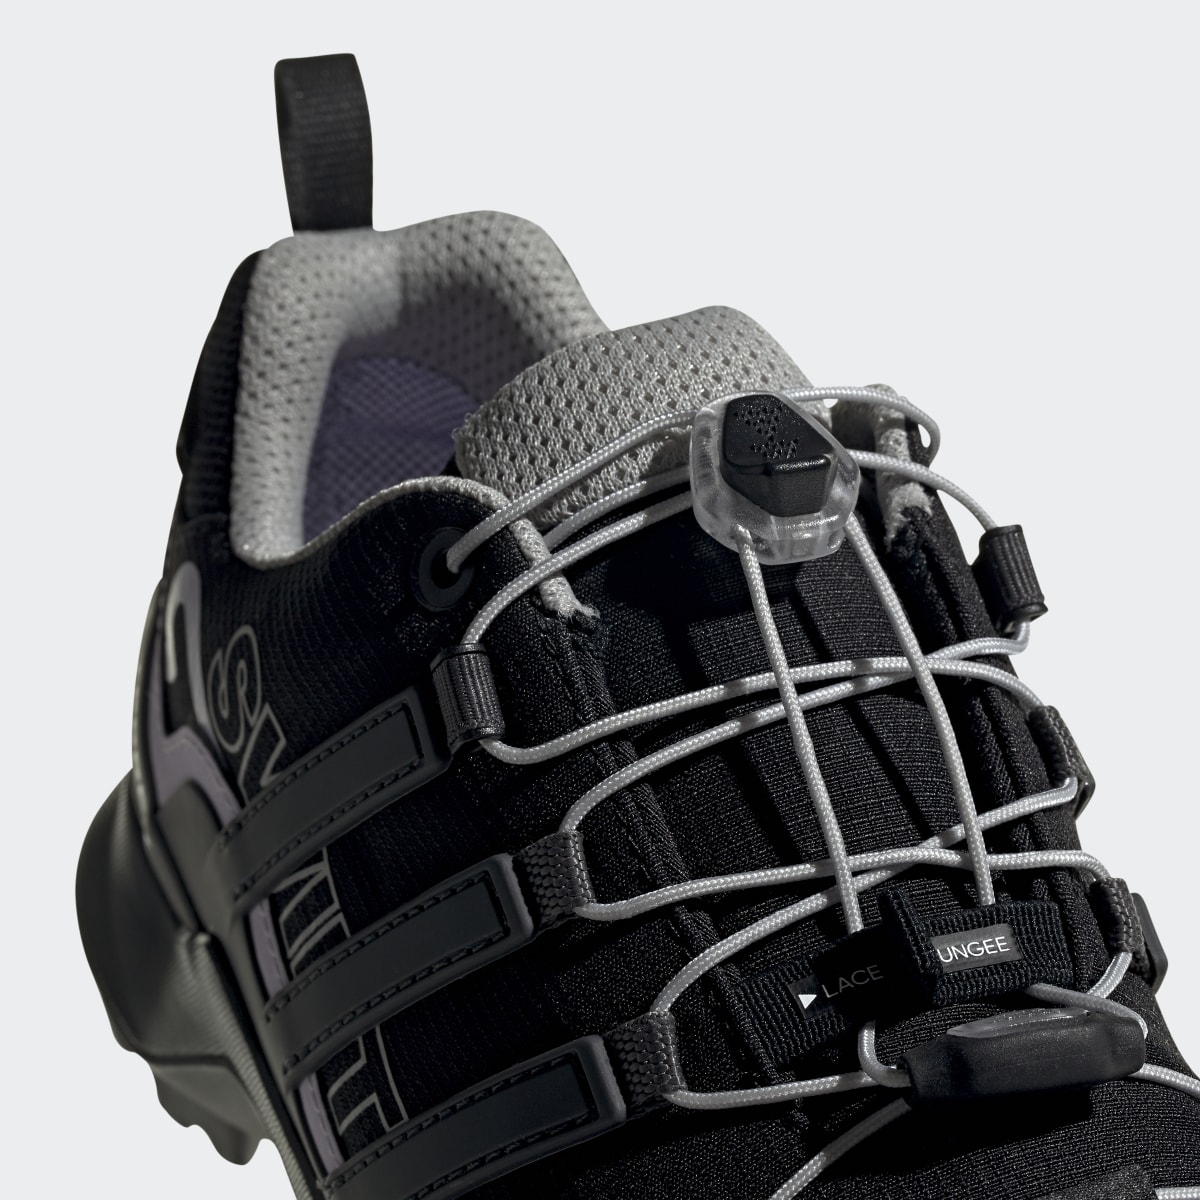 Adidas Chaussure de randonnée Terrex Swift R2 GORE-TEX. 10